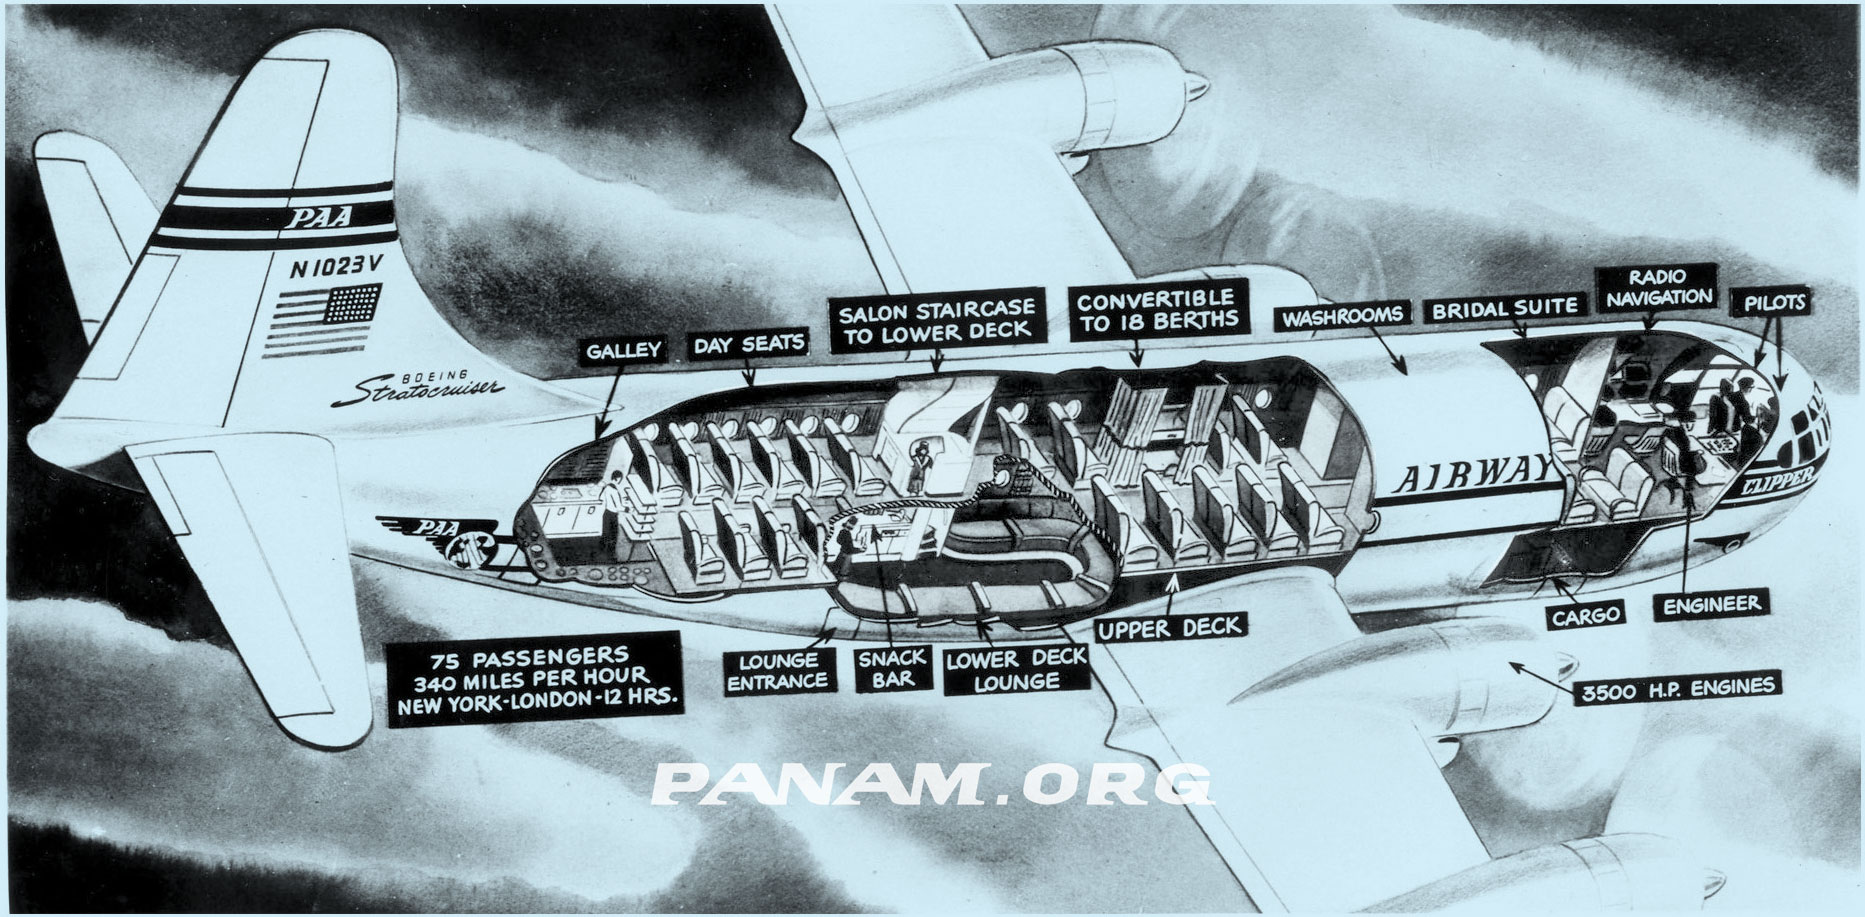 Pan Am N1023V B 377 Stratocruiser Cutaway